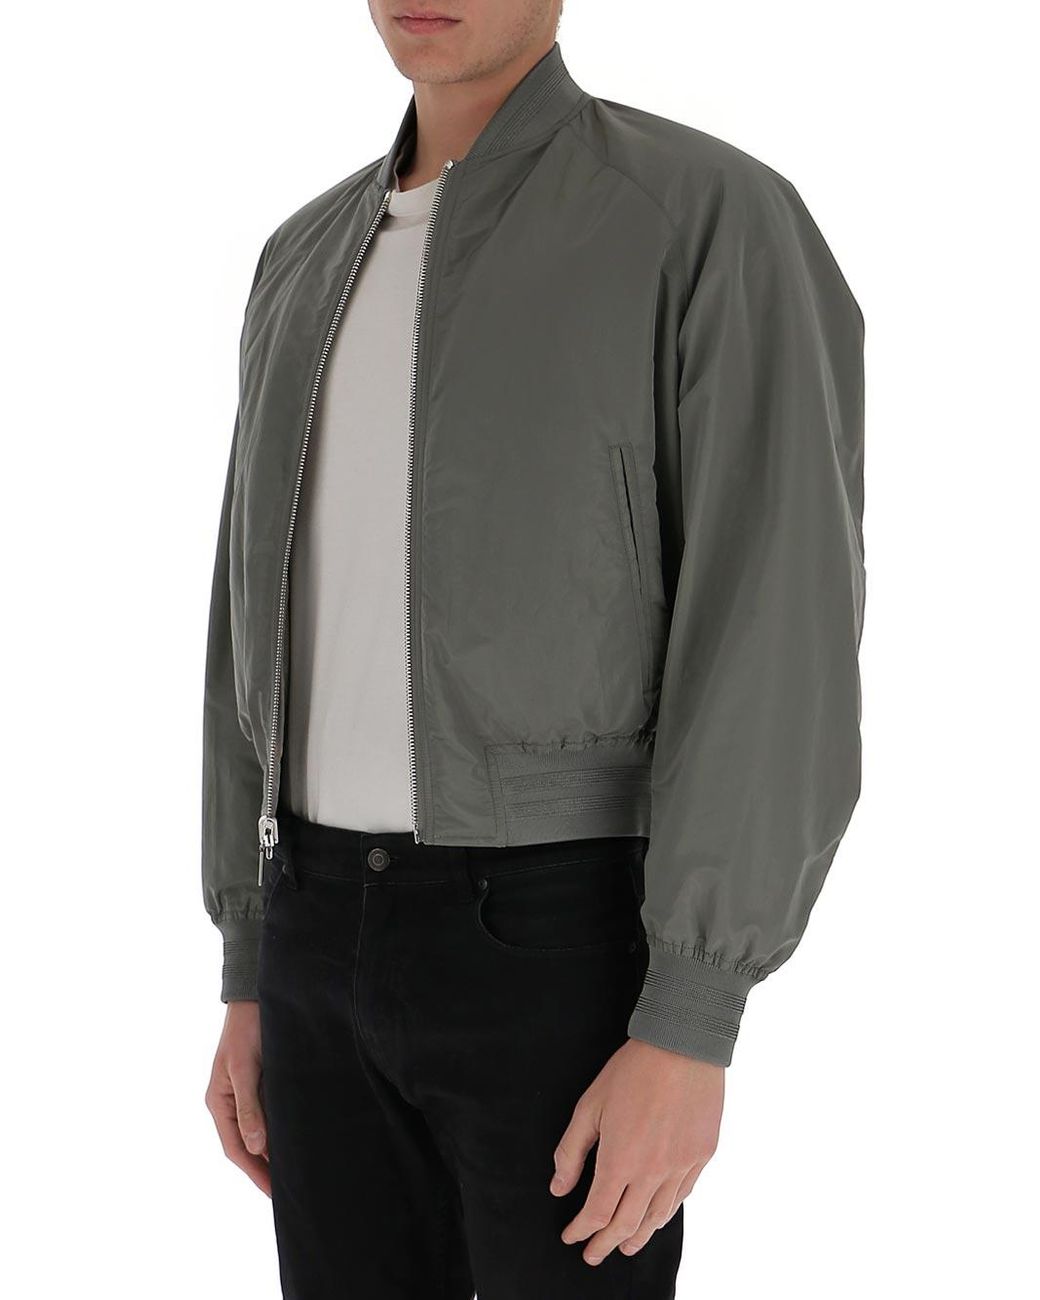 Christian Dior Oblique Reversible NavyGray Bomber Jacket Mens Size Medium   eBay